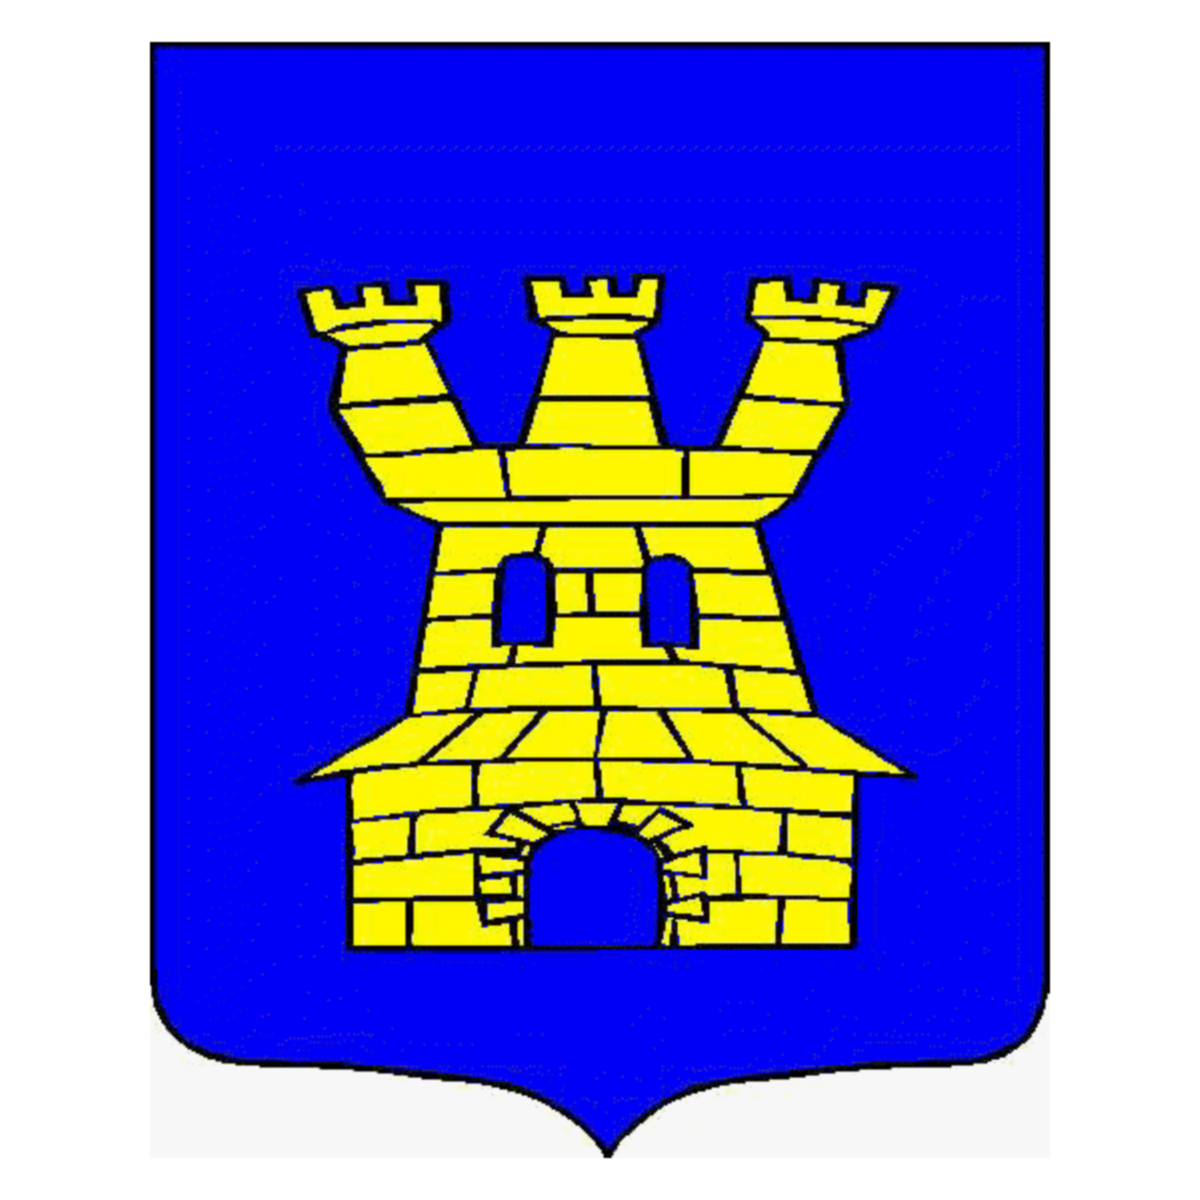 Wappen der Familie Chatelard